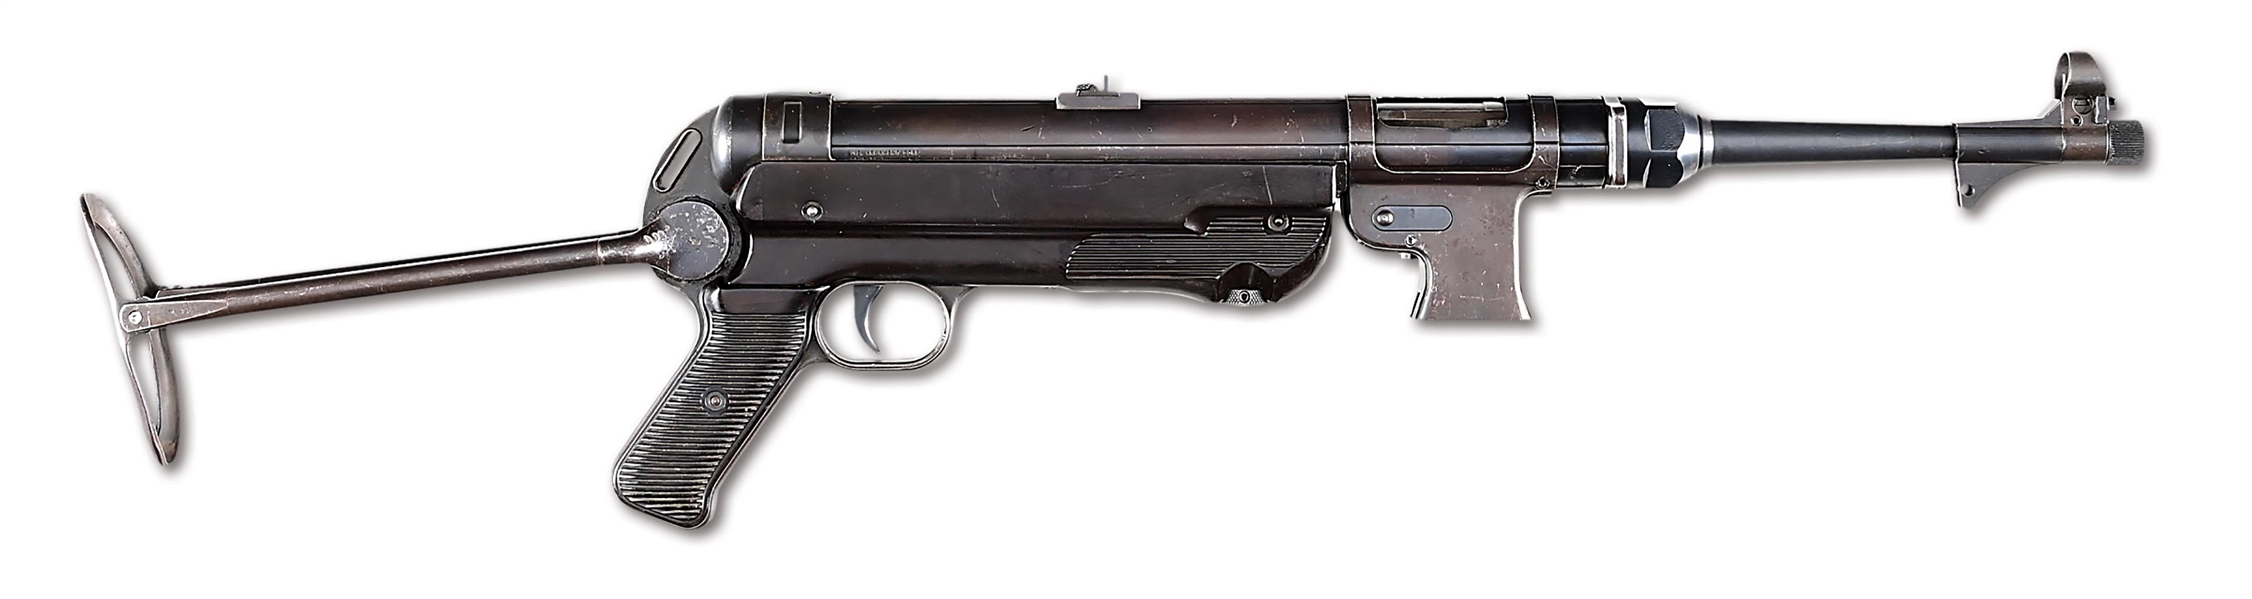 (N) EARLY FLAT SIDE MAGAZINE HOUSING C.G. HAENEL MANUFACTURED “FXO" CODE "41" DATE MP-40 MACHINE GUN (CURIO & RELIC).